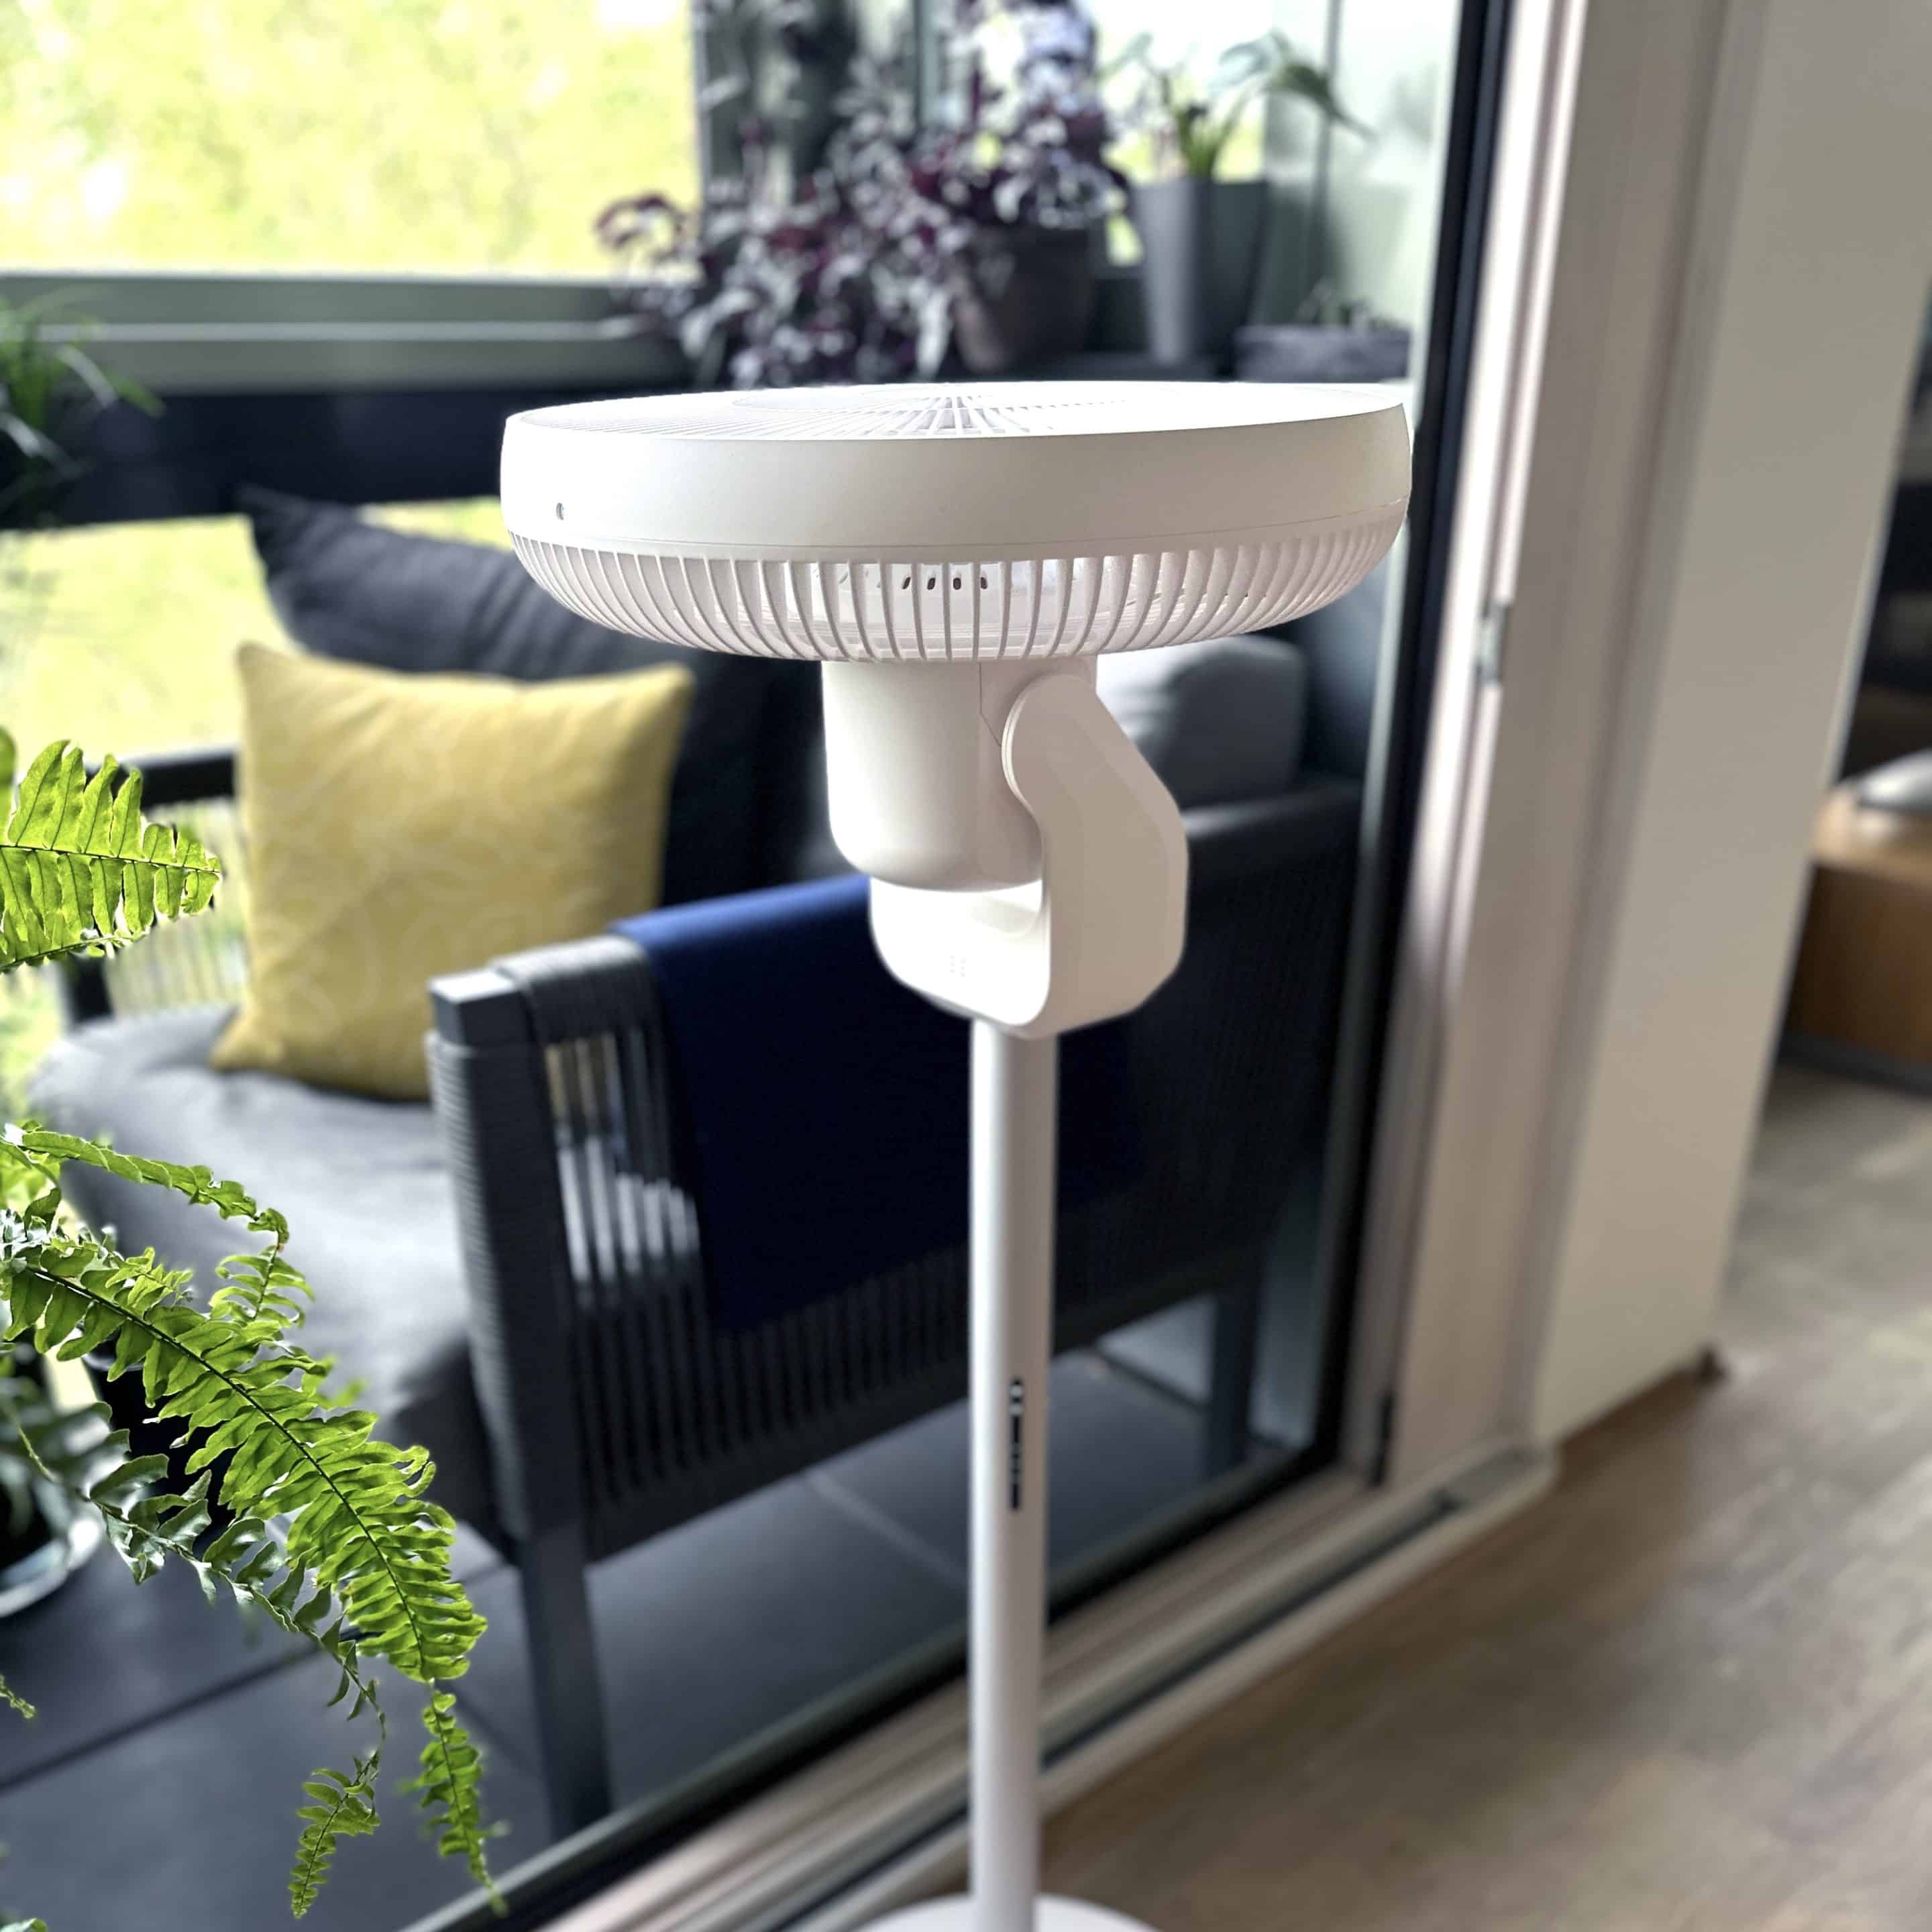 With HomeKit and battery: Smartmi Air Circulator Fan